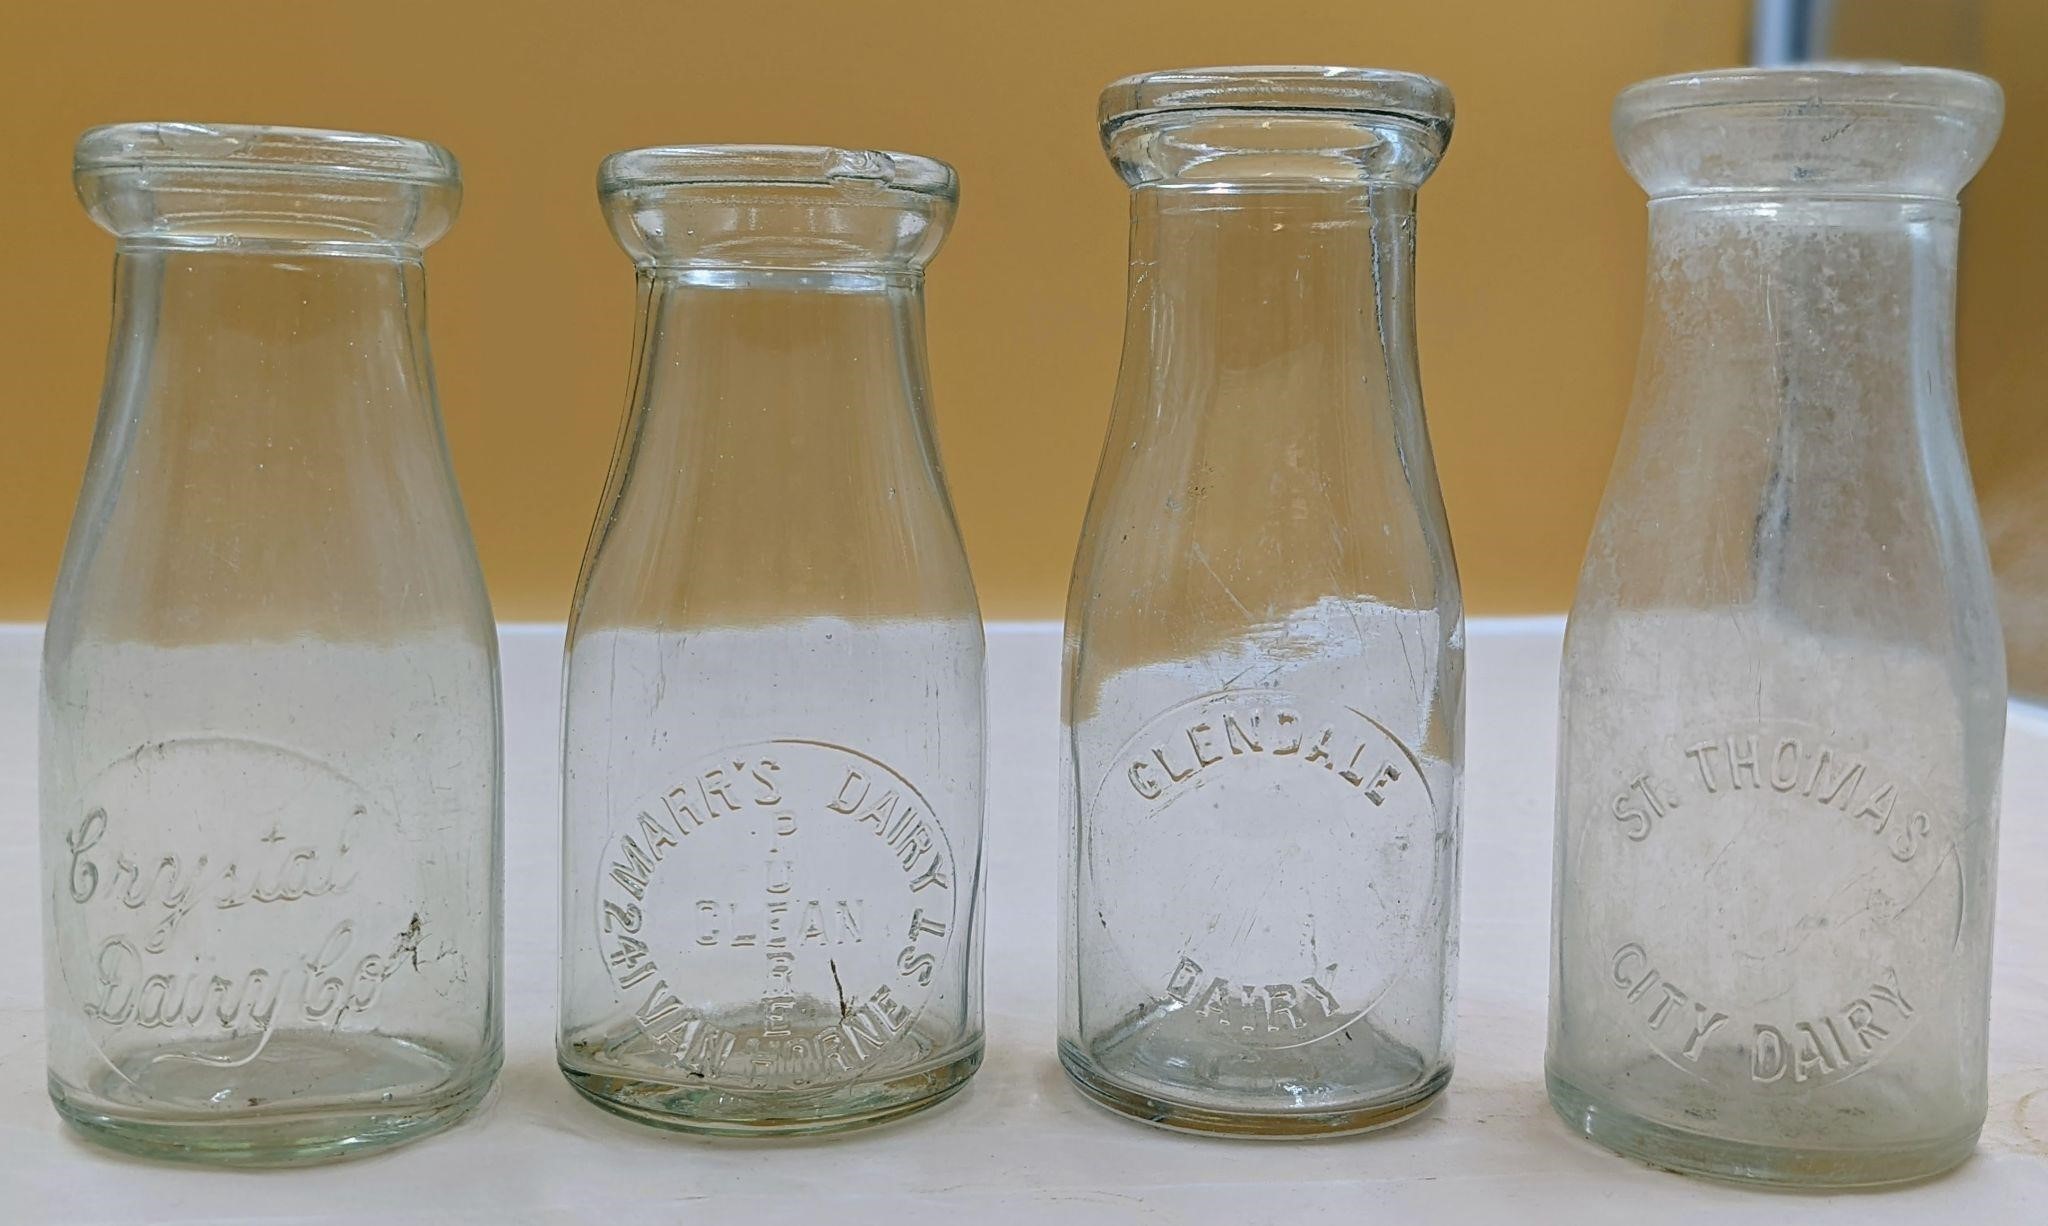 Vintage Dairy Bottles